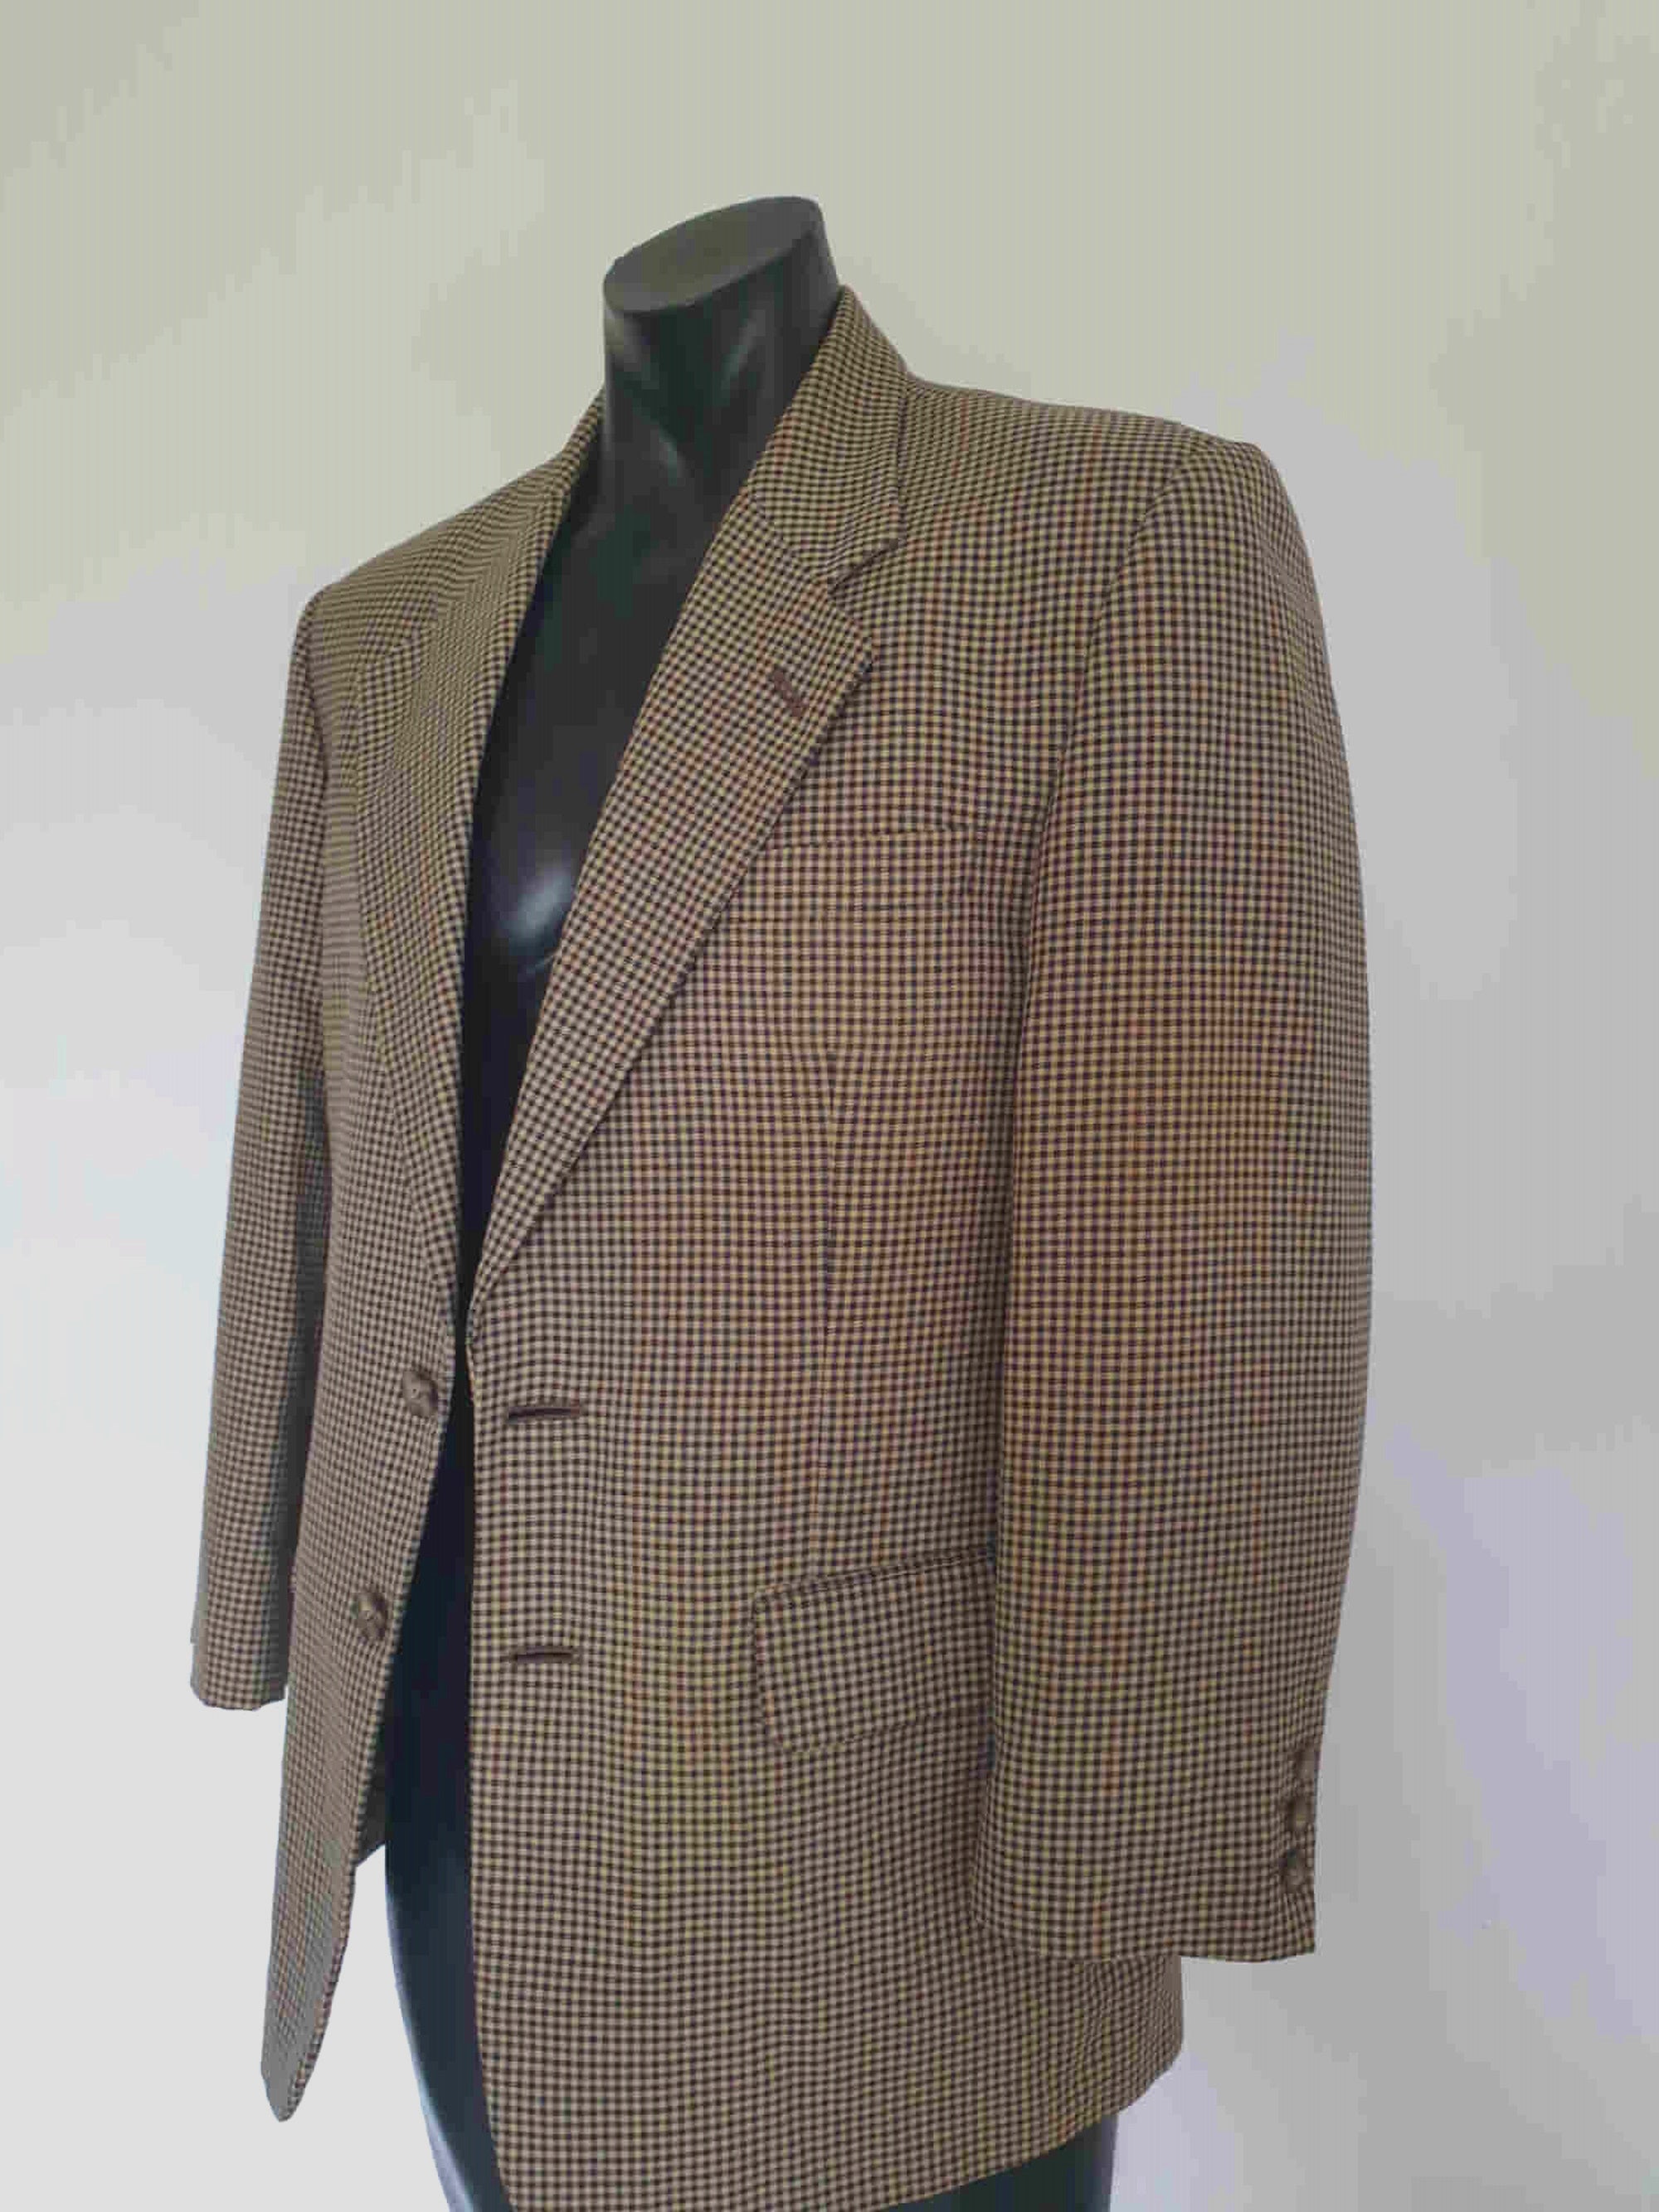 vintage beige houndstooth wool sports jacket by fletcher jones